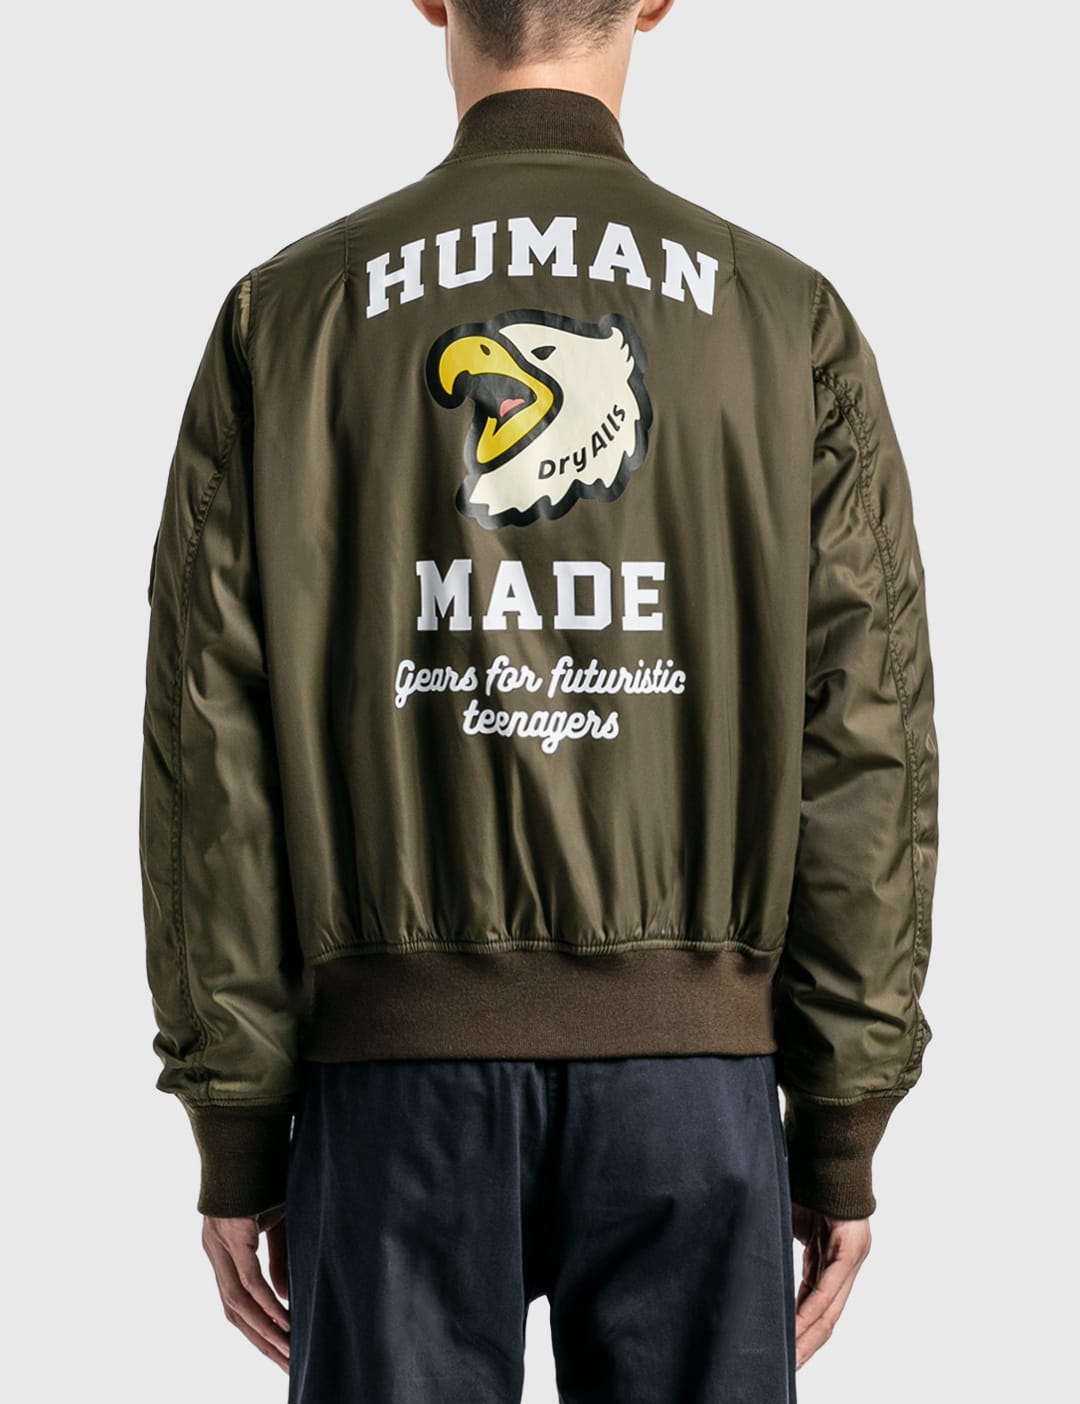 Human Made   MA Jacket   HBX   Globally Curated Fashion and